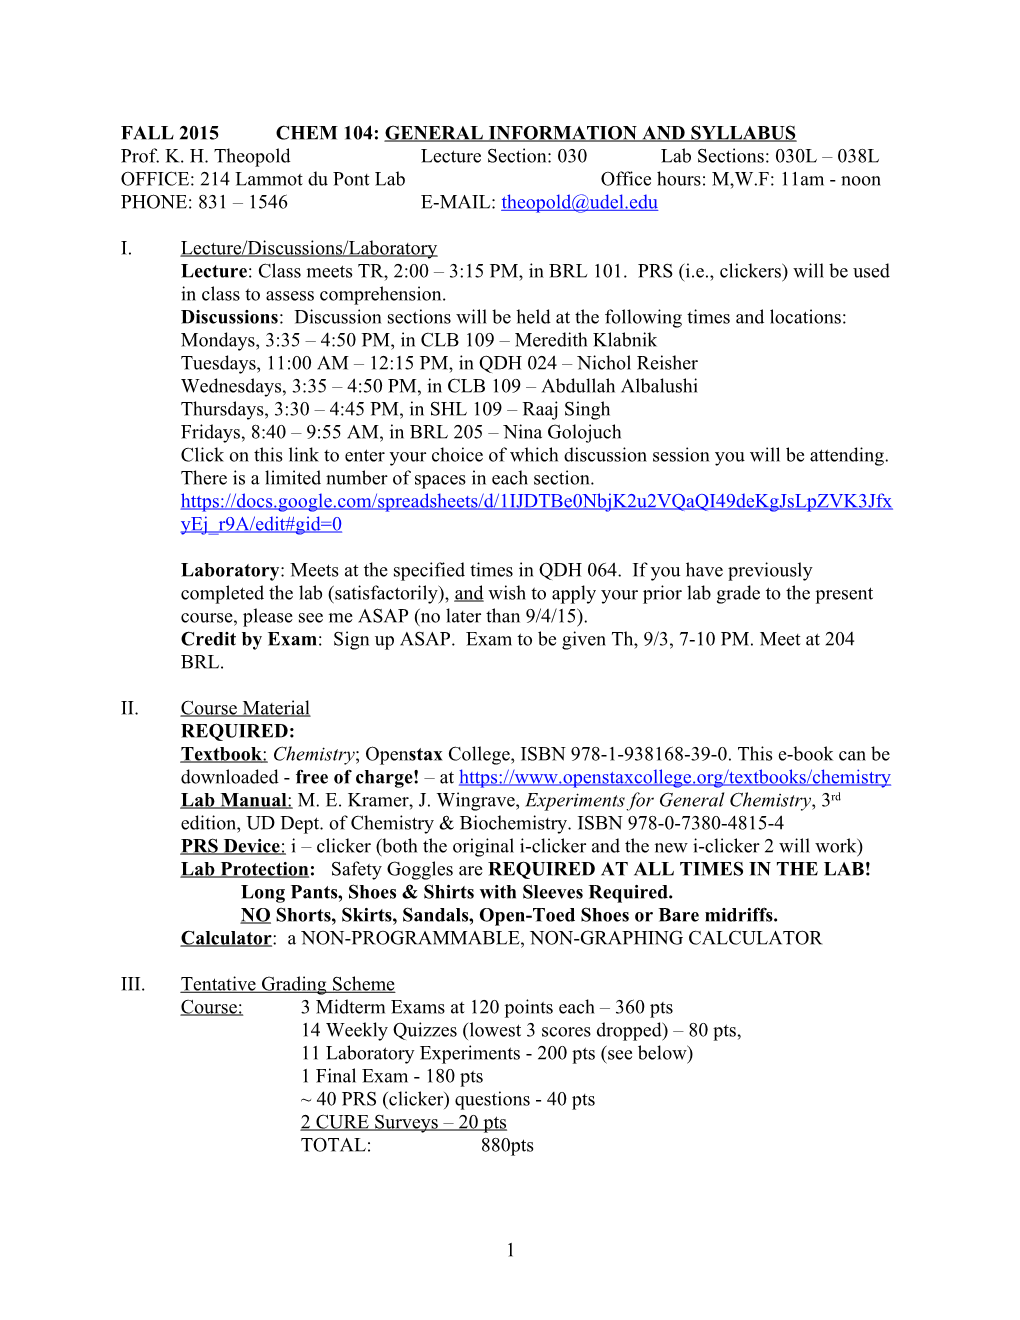 Fall 2015 Chem 104: General Information and Syllabus